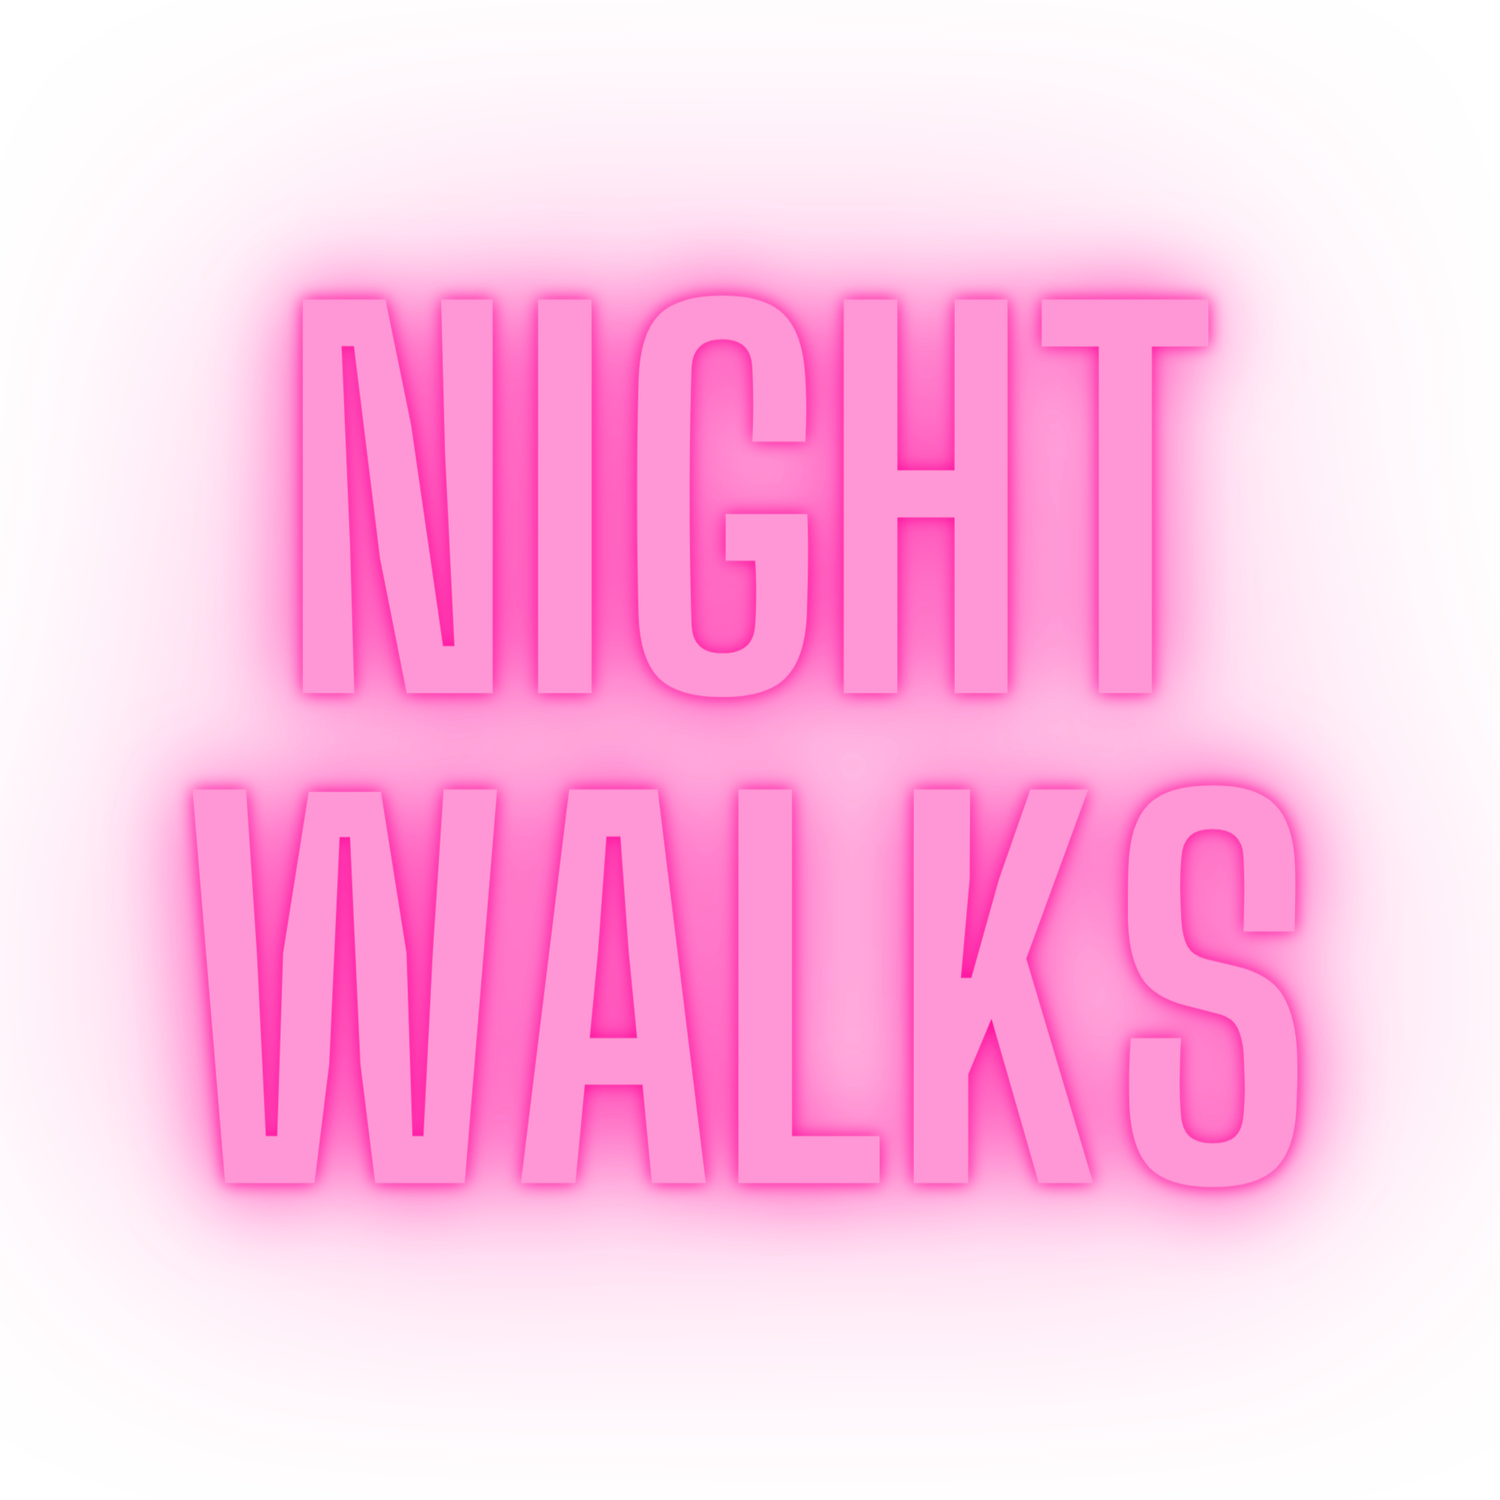 Night Walks